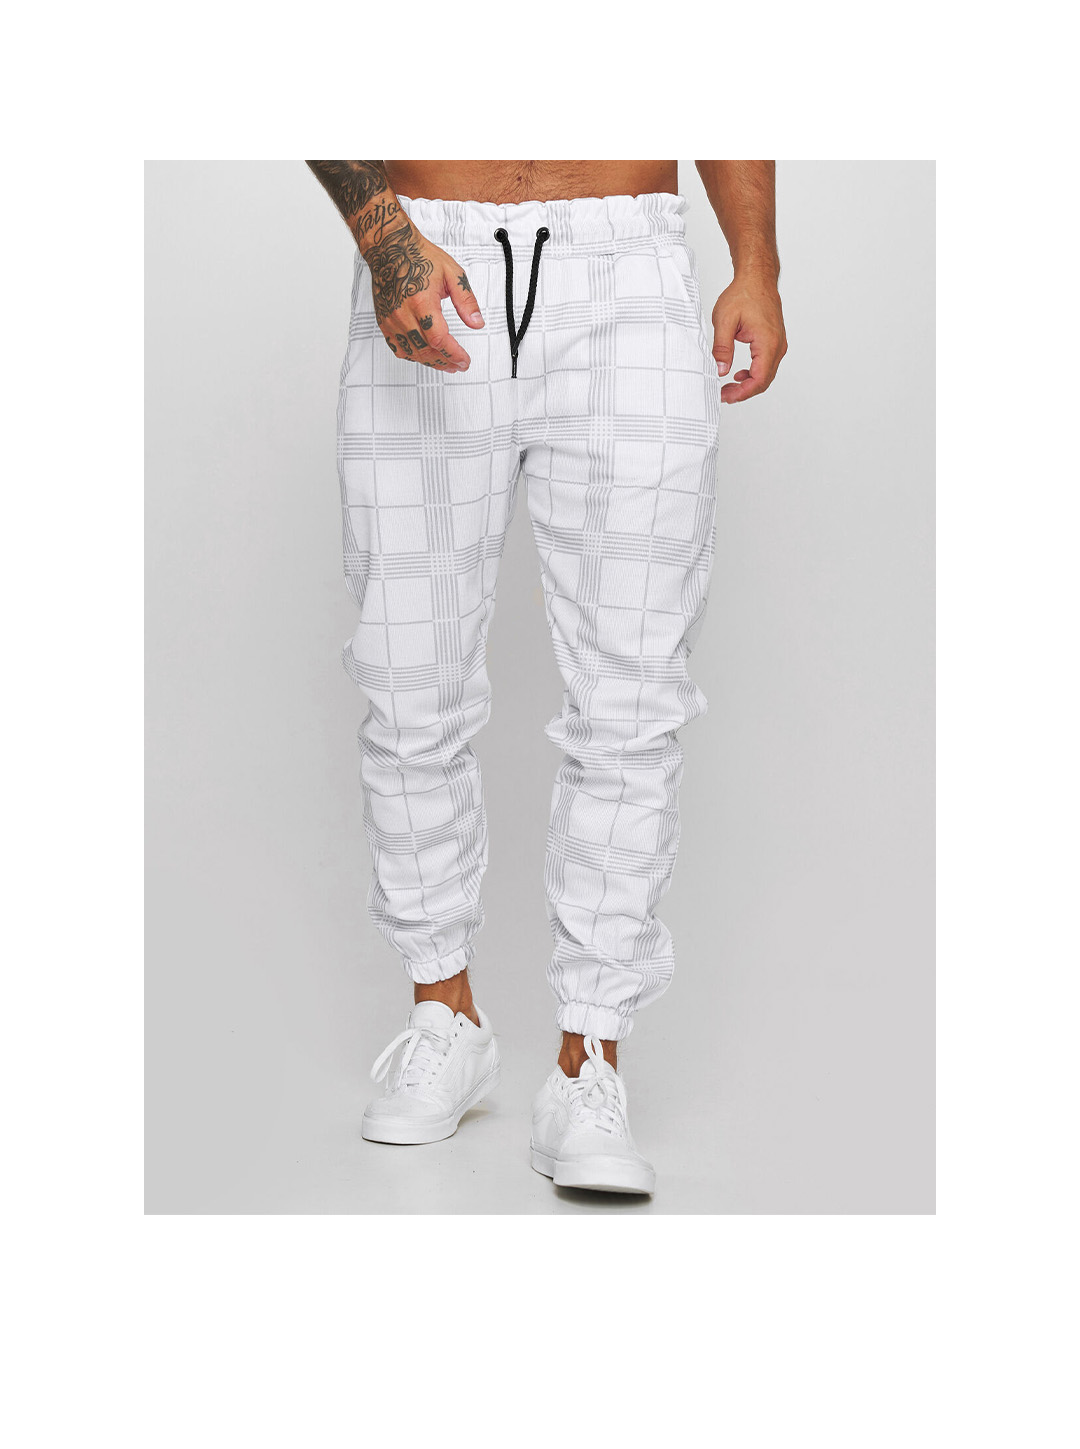 Men's Trousers Tapered pants 3D Print Full Length Pants Casual Inelastic Plaid Cotton Blend Sports Mid Waist White Black Light Grey Dark Gray M L XL XXL 3XL